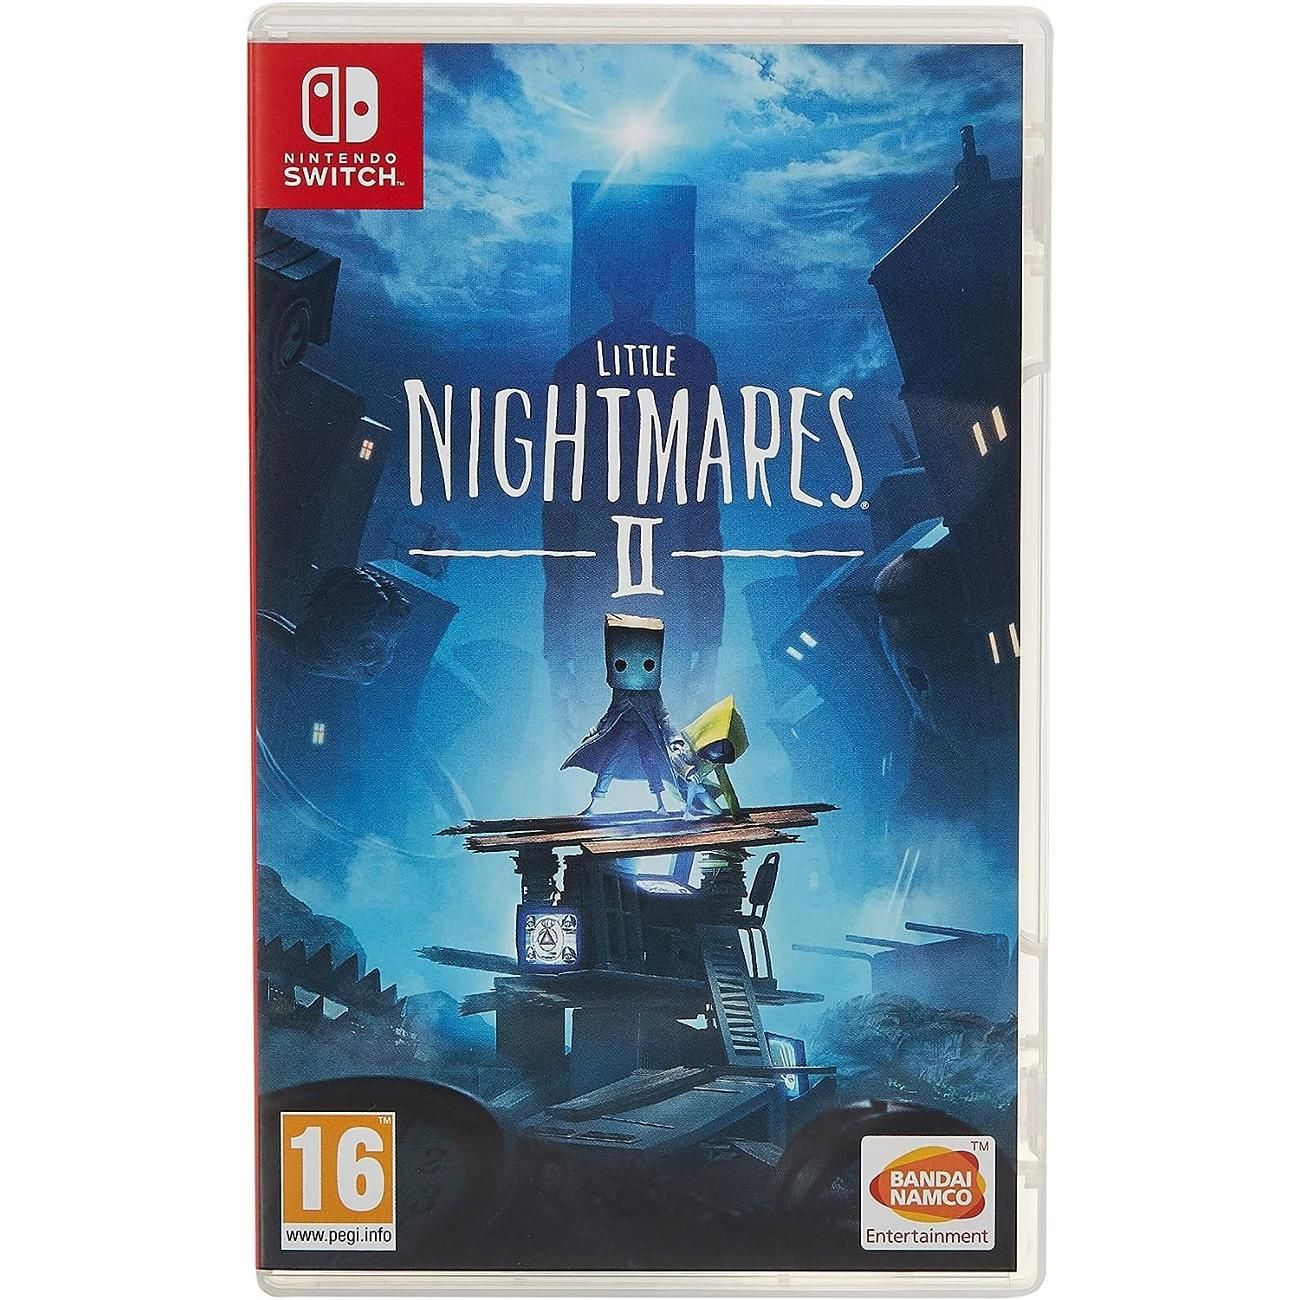 Nightmares Nintendo Switch Cover.